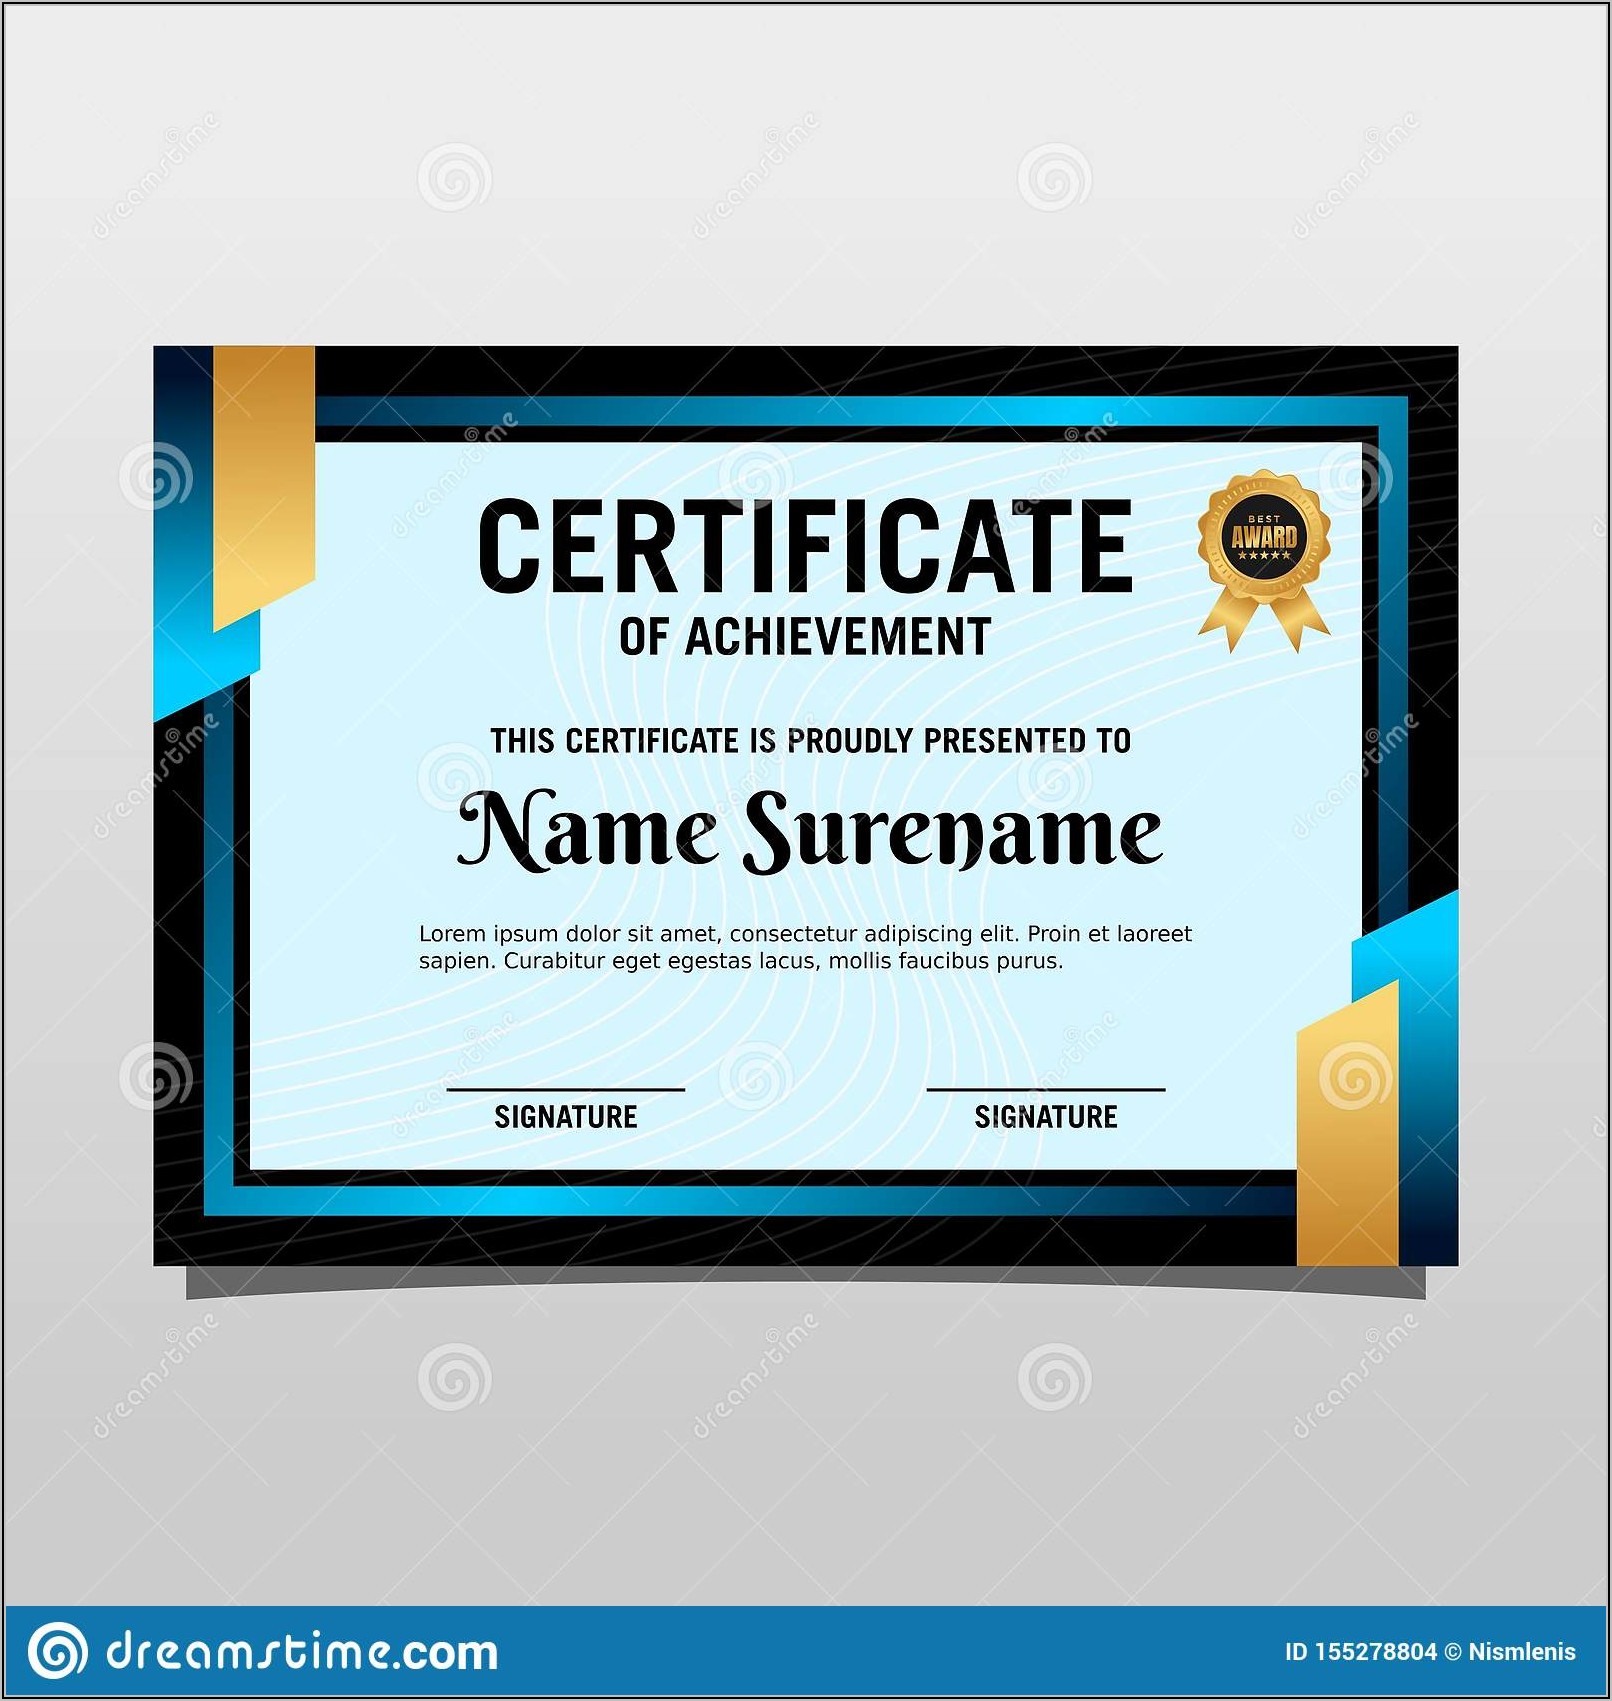 Template Certificate Of Appreciation Ppt